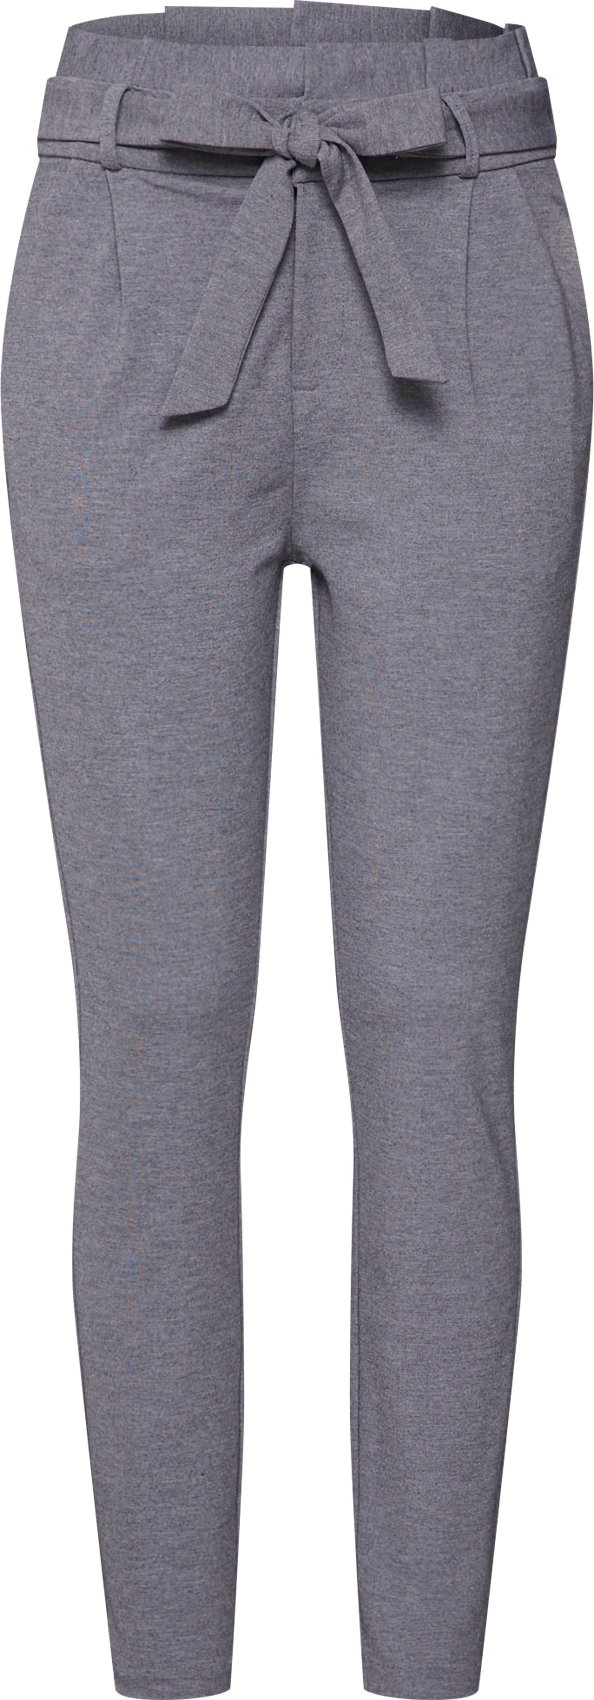 Kalhoty se sklady v pase 'Eva' Vero Moda šedá